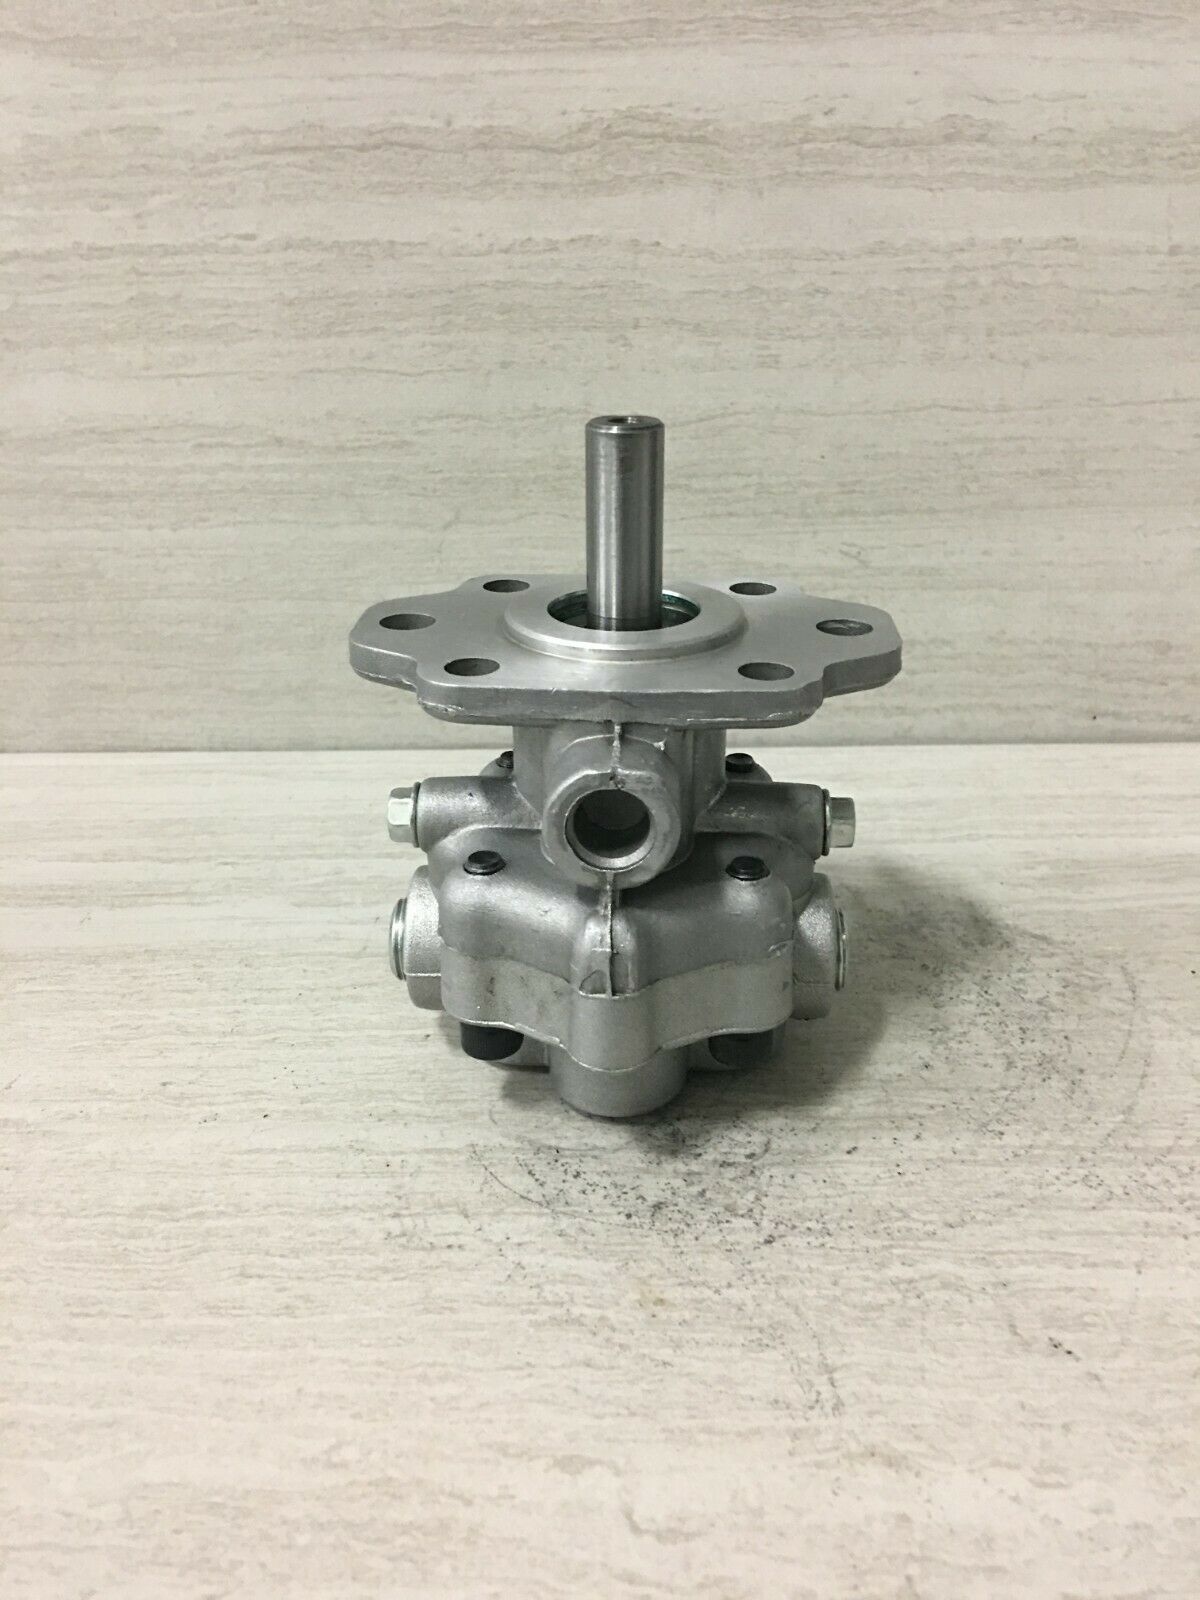 Model 85579-04 60941 60893 94 61176 Details about   Hydraulic Gear Pump 